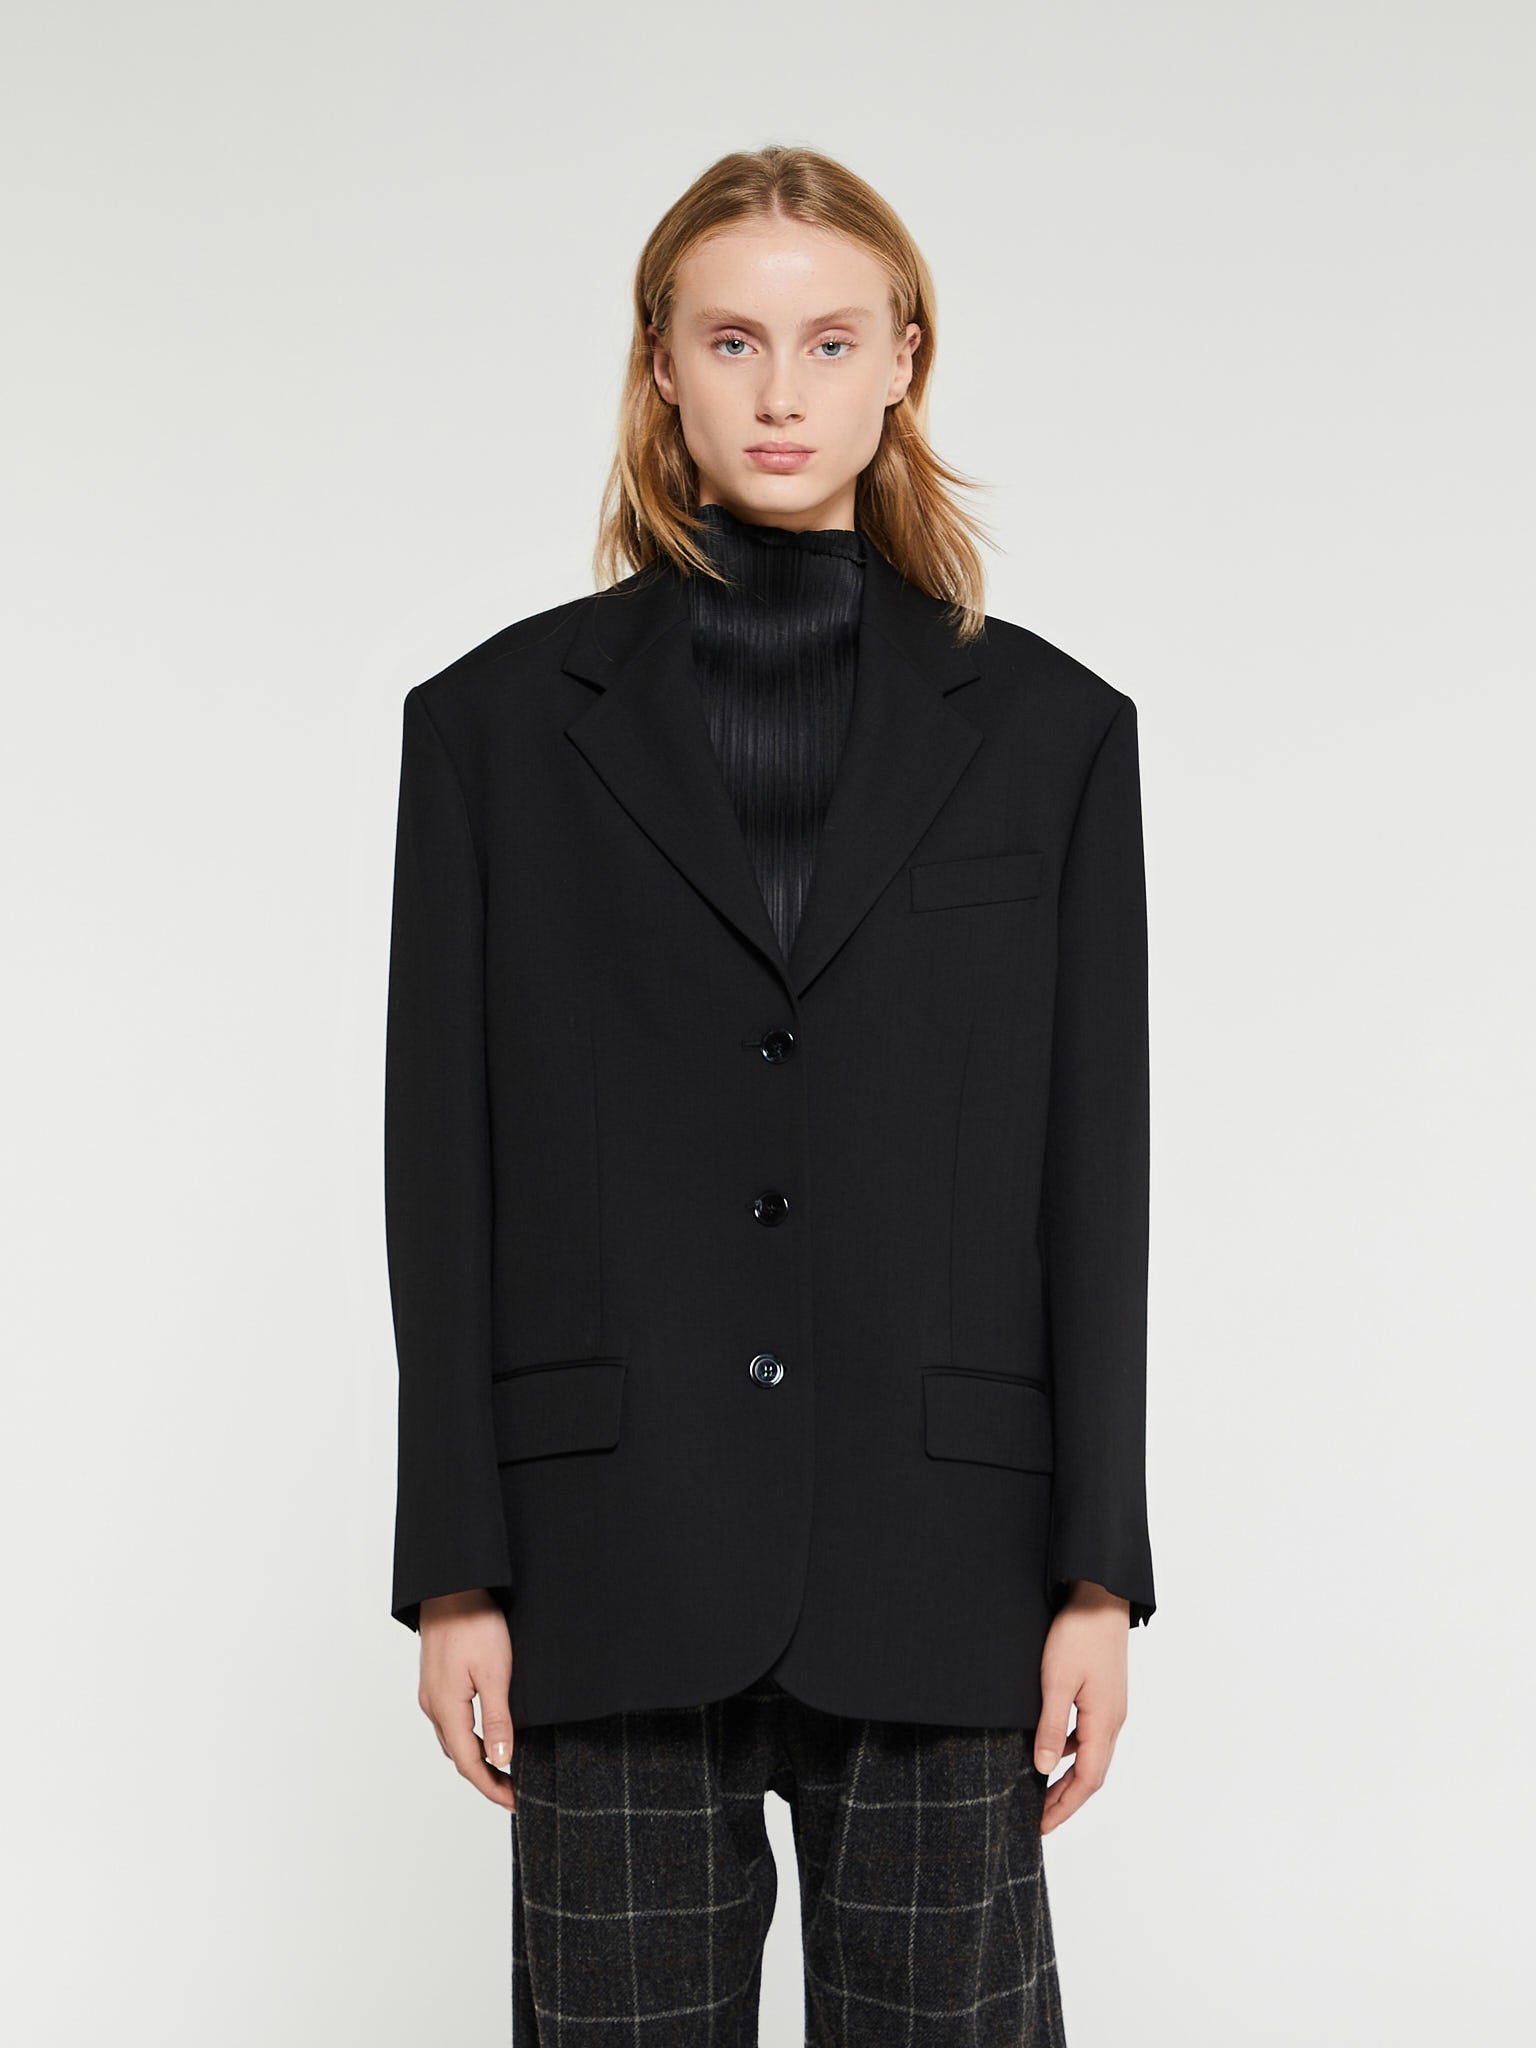 Acne Studios - Oversized Fit Suit Jacket in Black